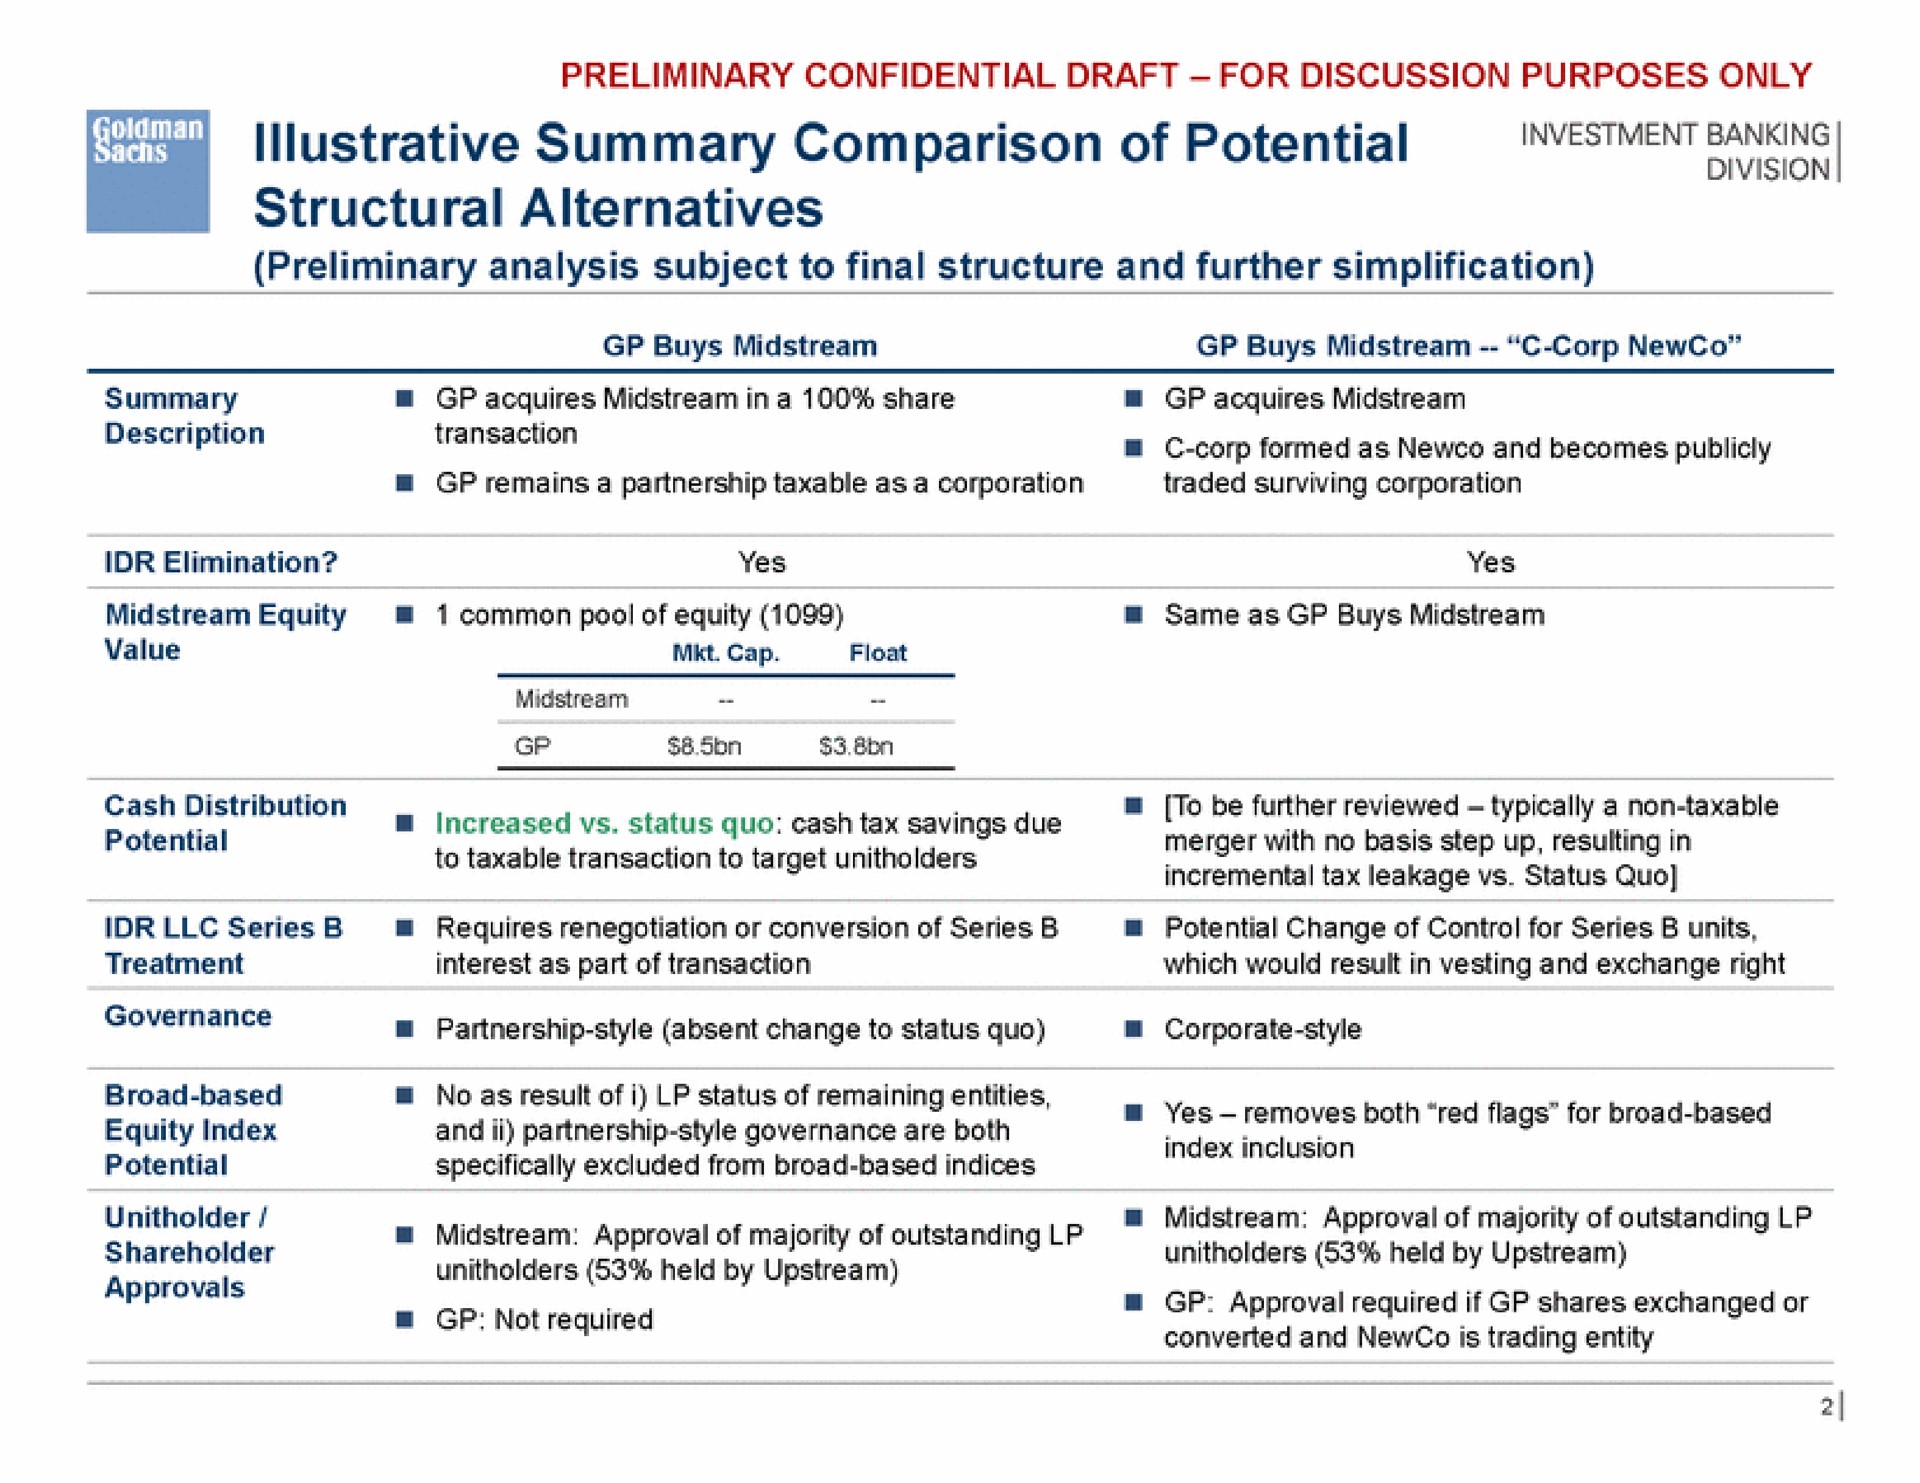 illustrative summary comparison of potential structural alternatives | Goldman Sachs